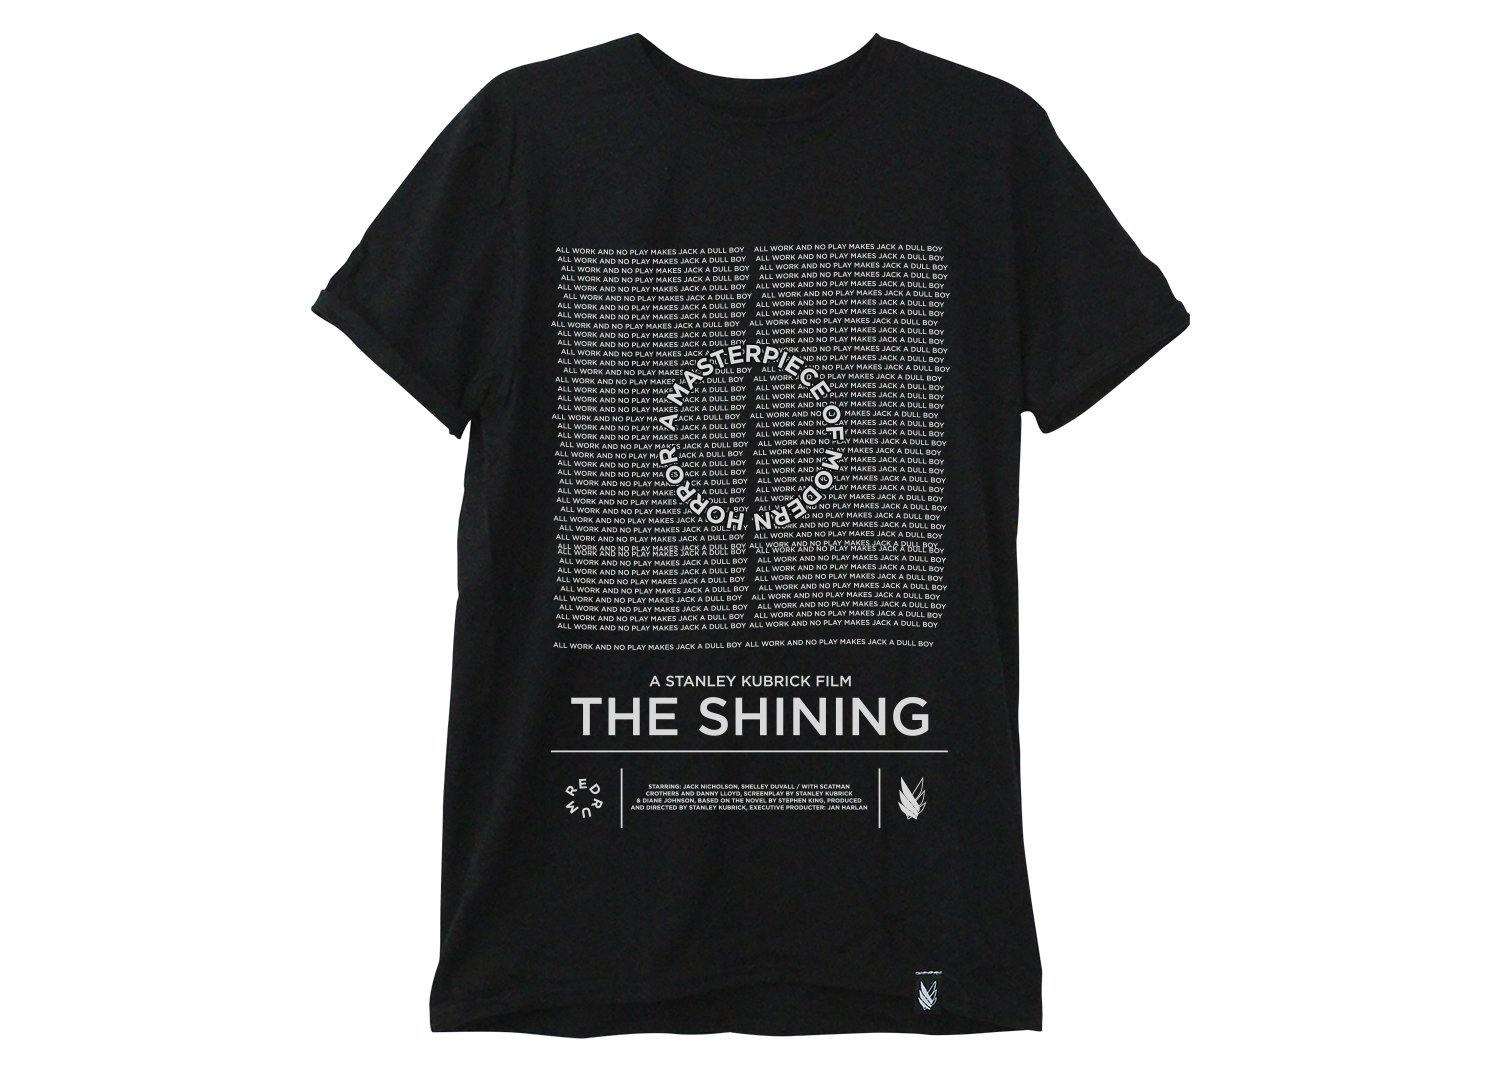 the shining - Stockholm Co. - Playera - cultura pop, halloween, hombre, otros, playera, unisex